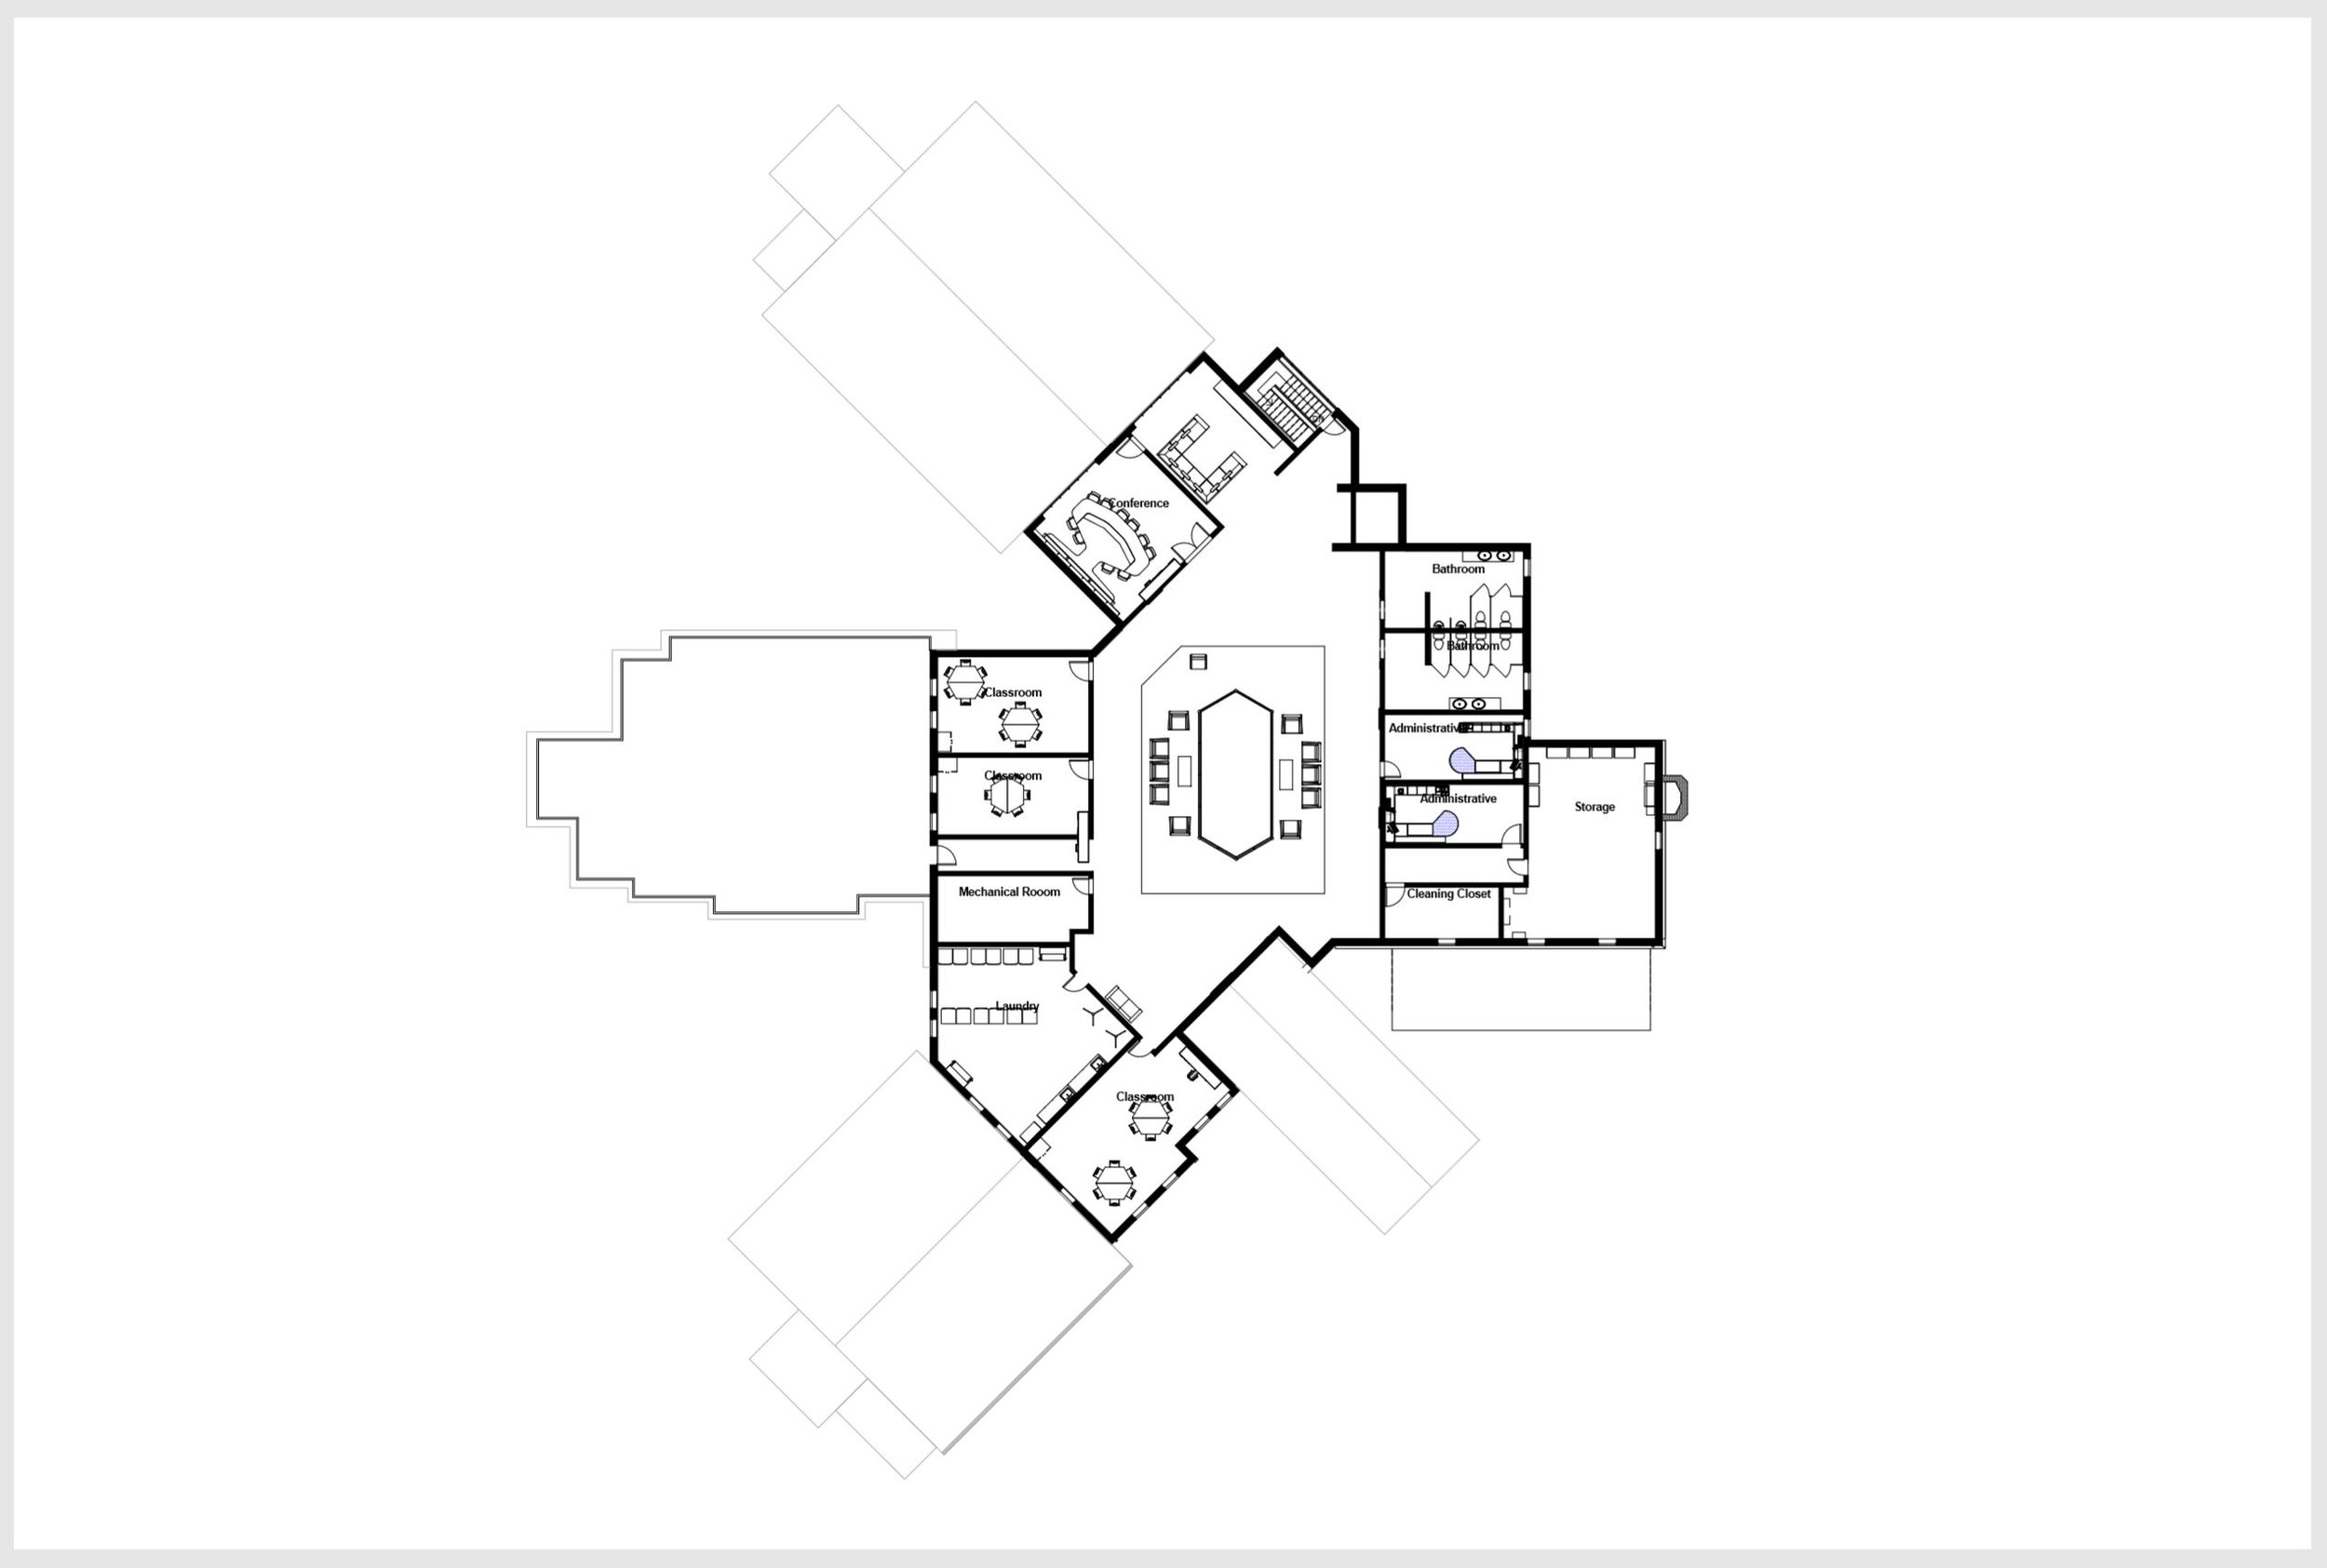 assisted living building design 2ND FL PLAN - TARCHITECTS.JPG